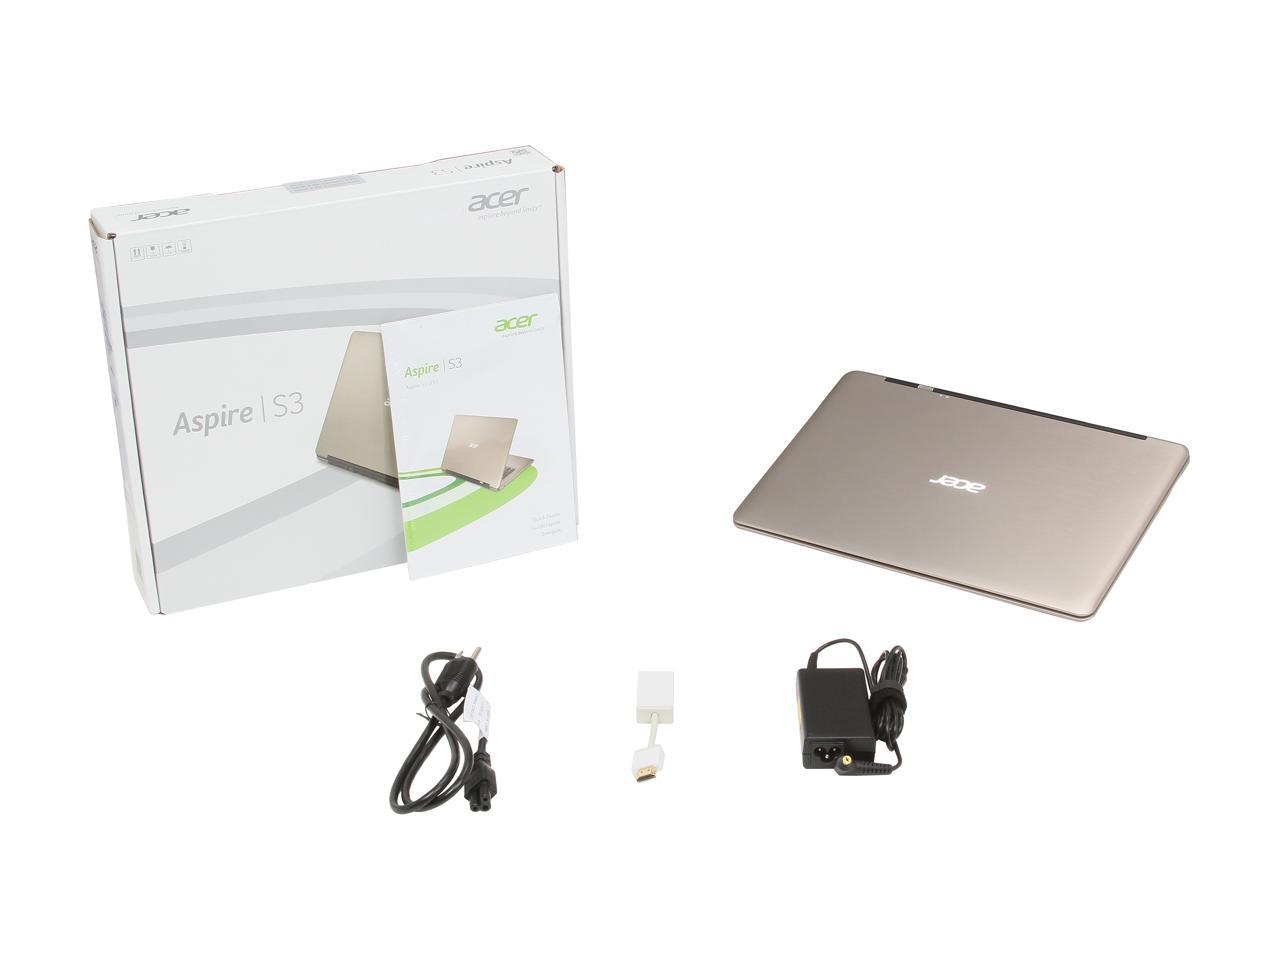 Acer Ultrabook Aspire Intel Core i3 3rd Gen 3227U (1.90GHz) 4GB 